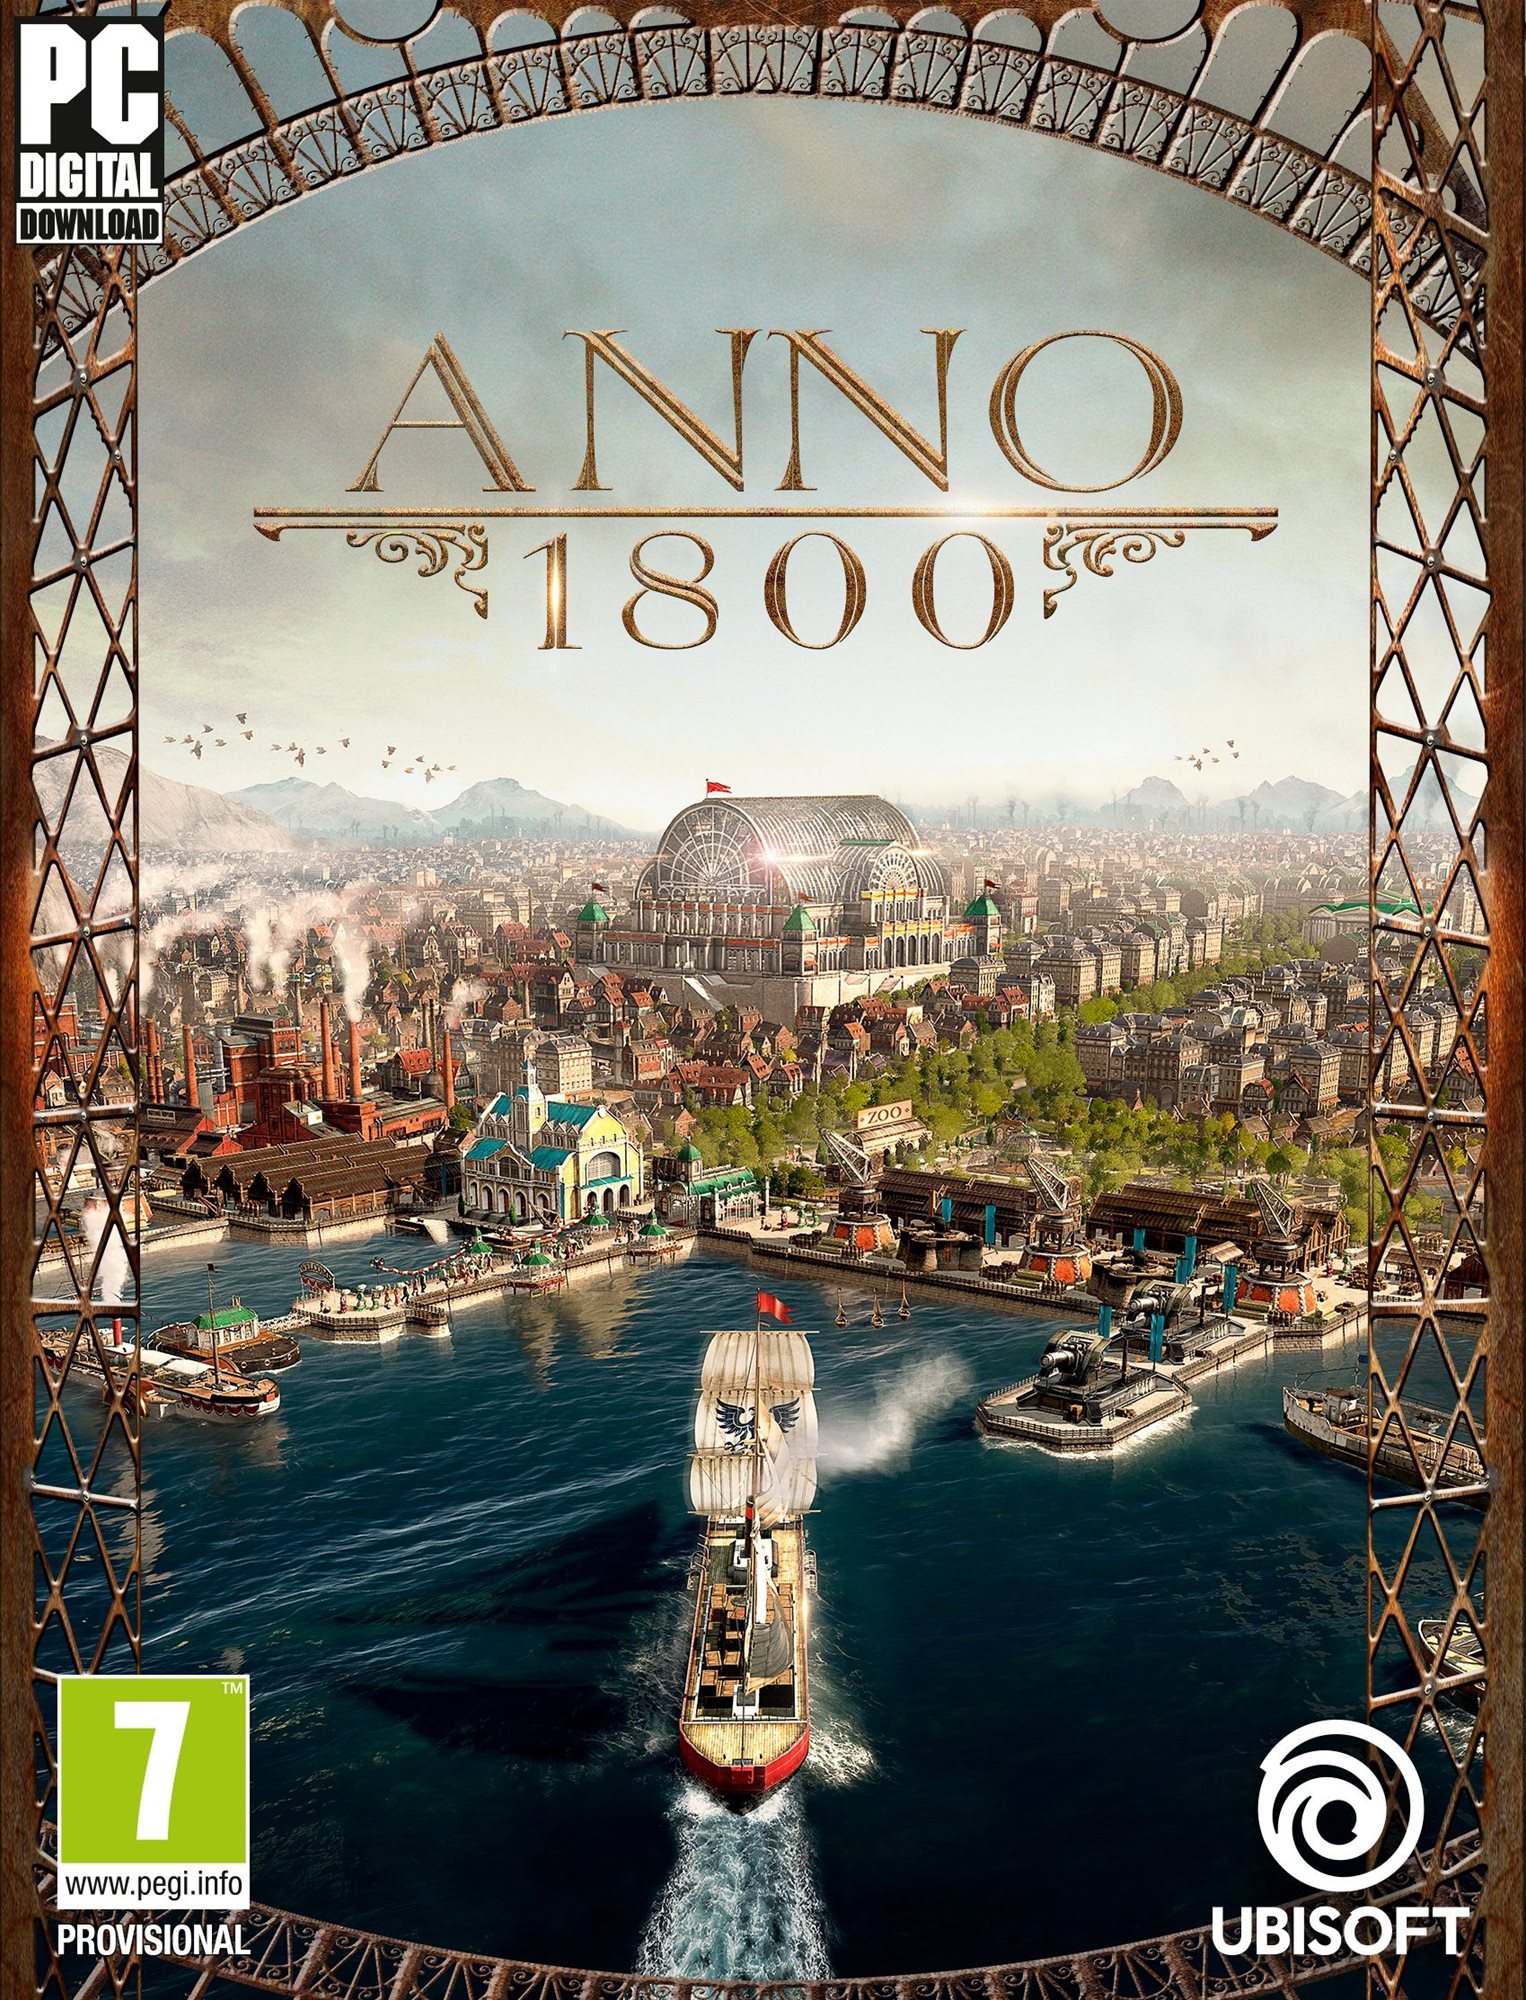 Anno 1800 - Season Pass 3 - PC DIGITAL